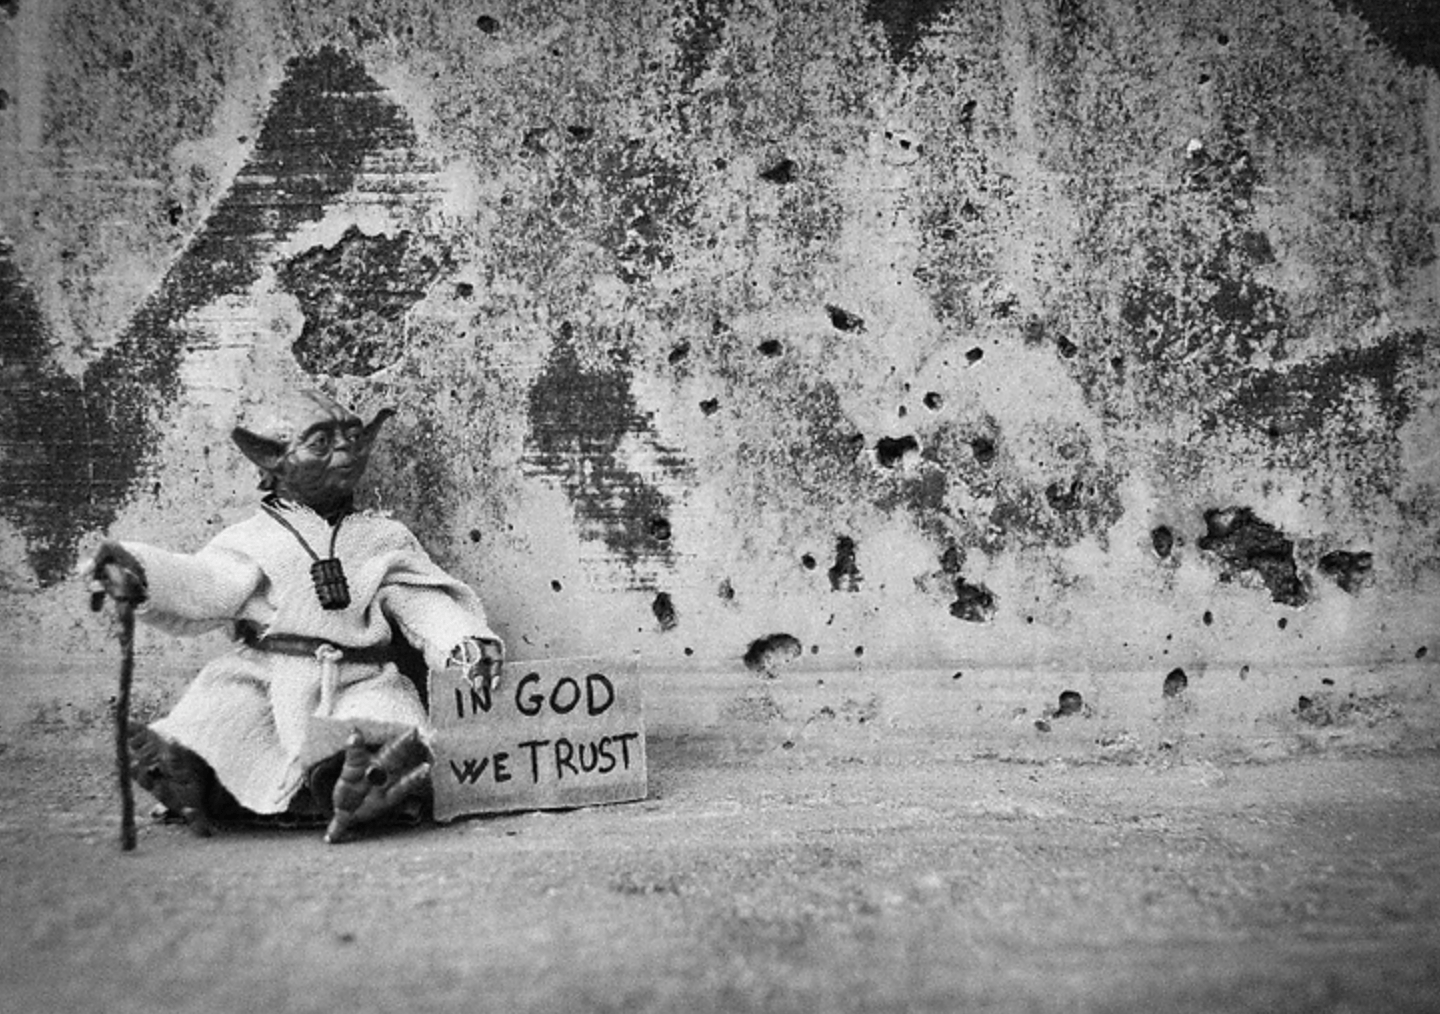 Gericho - Yoda "In god we trust" 1